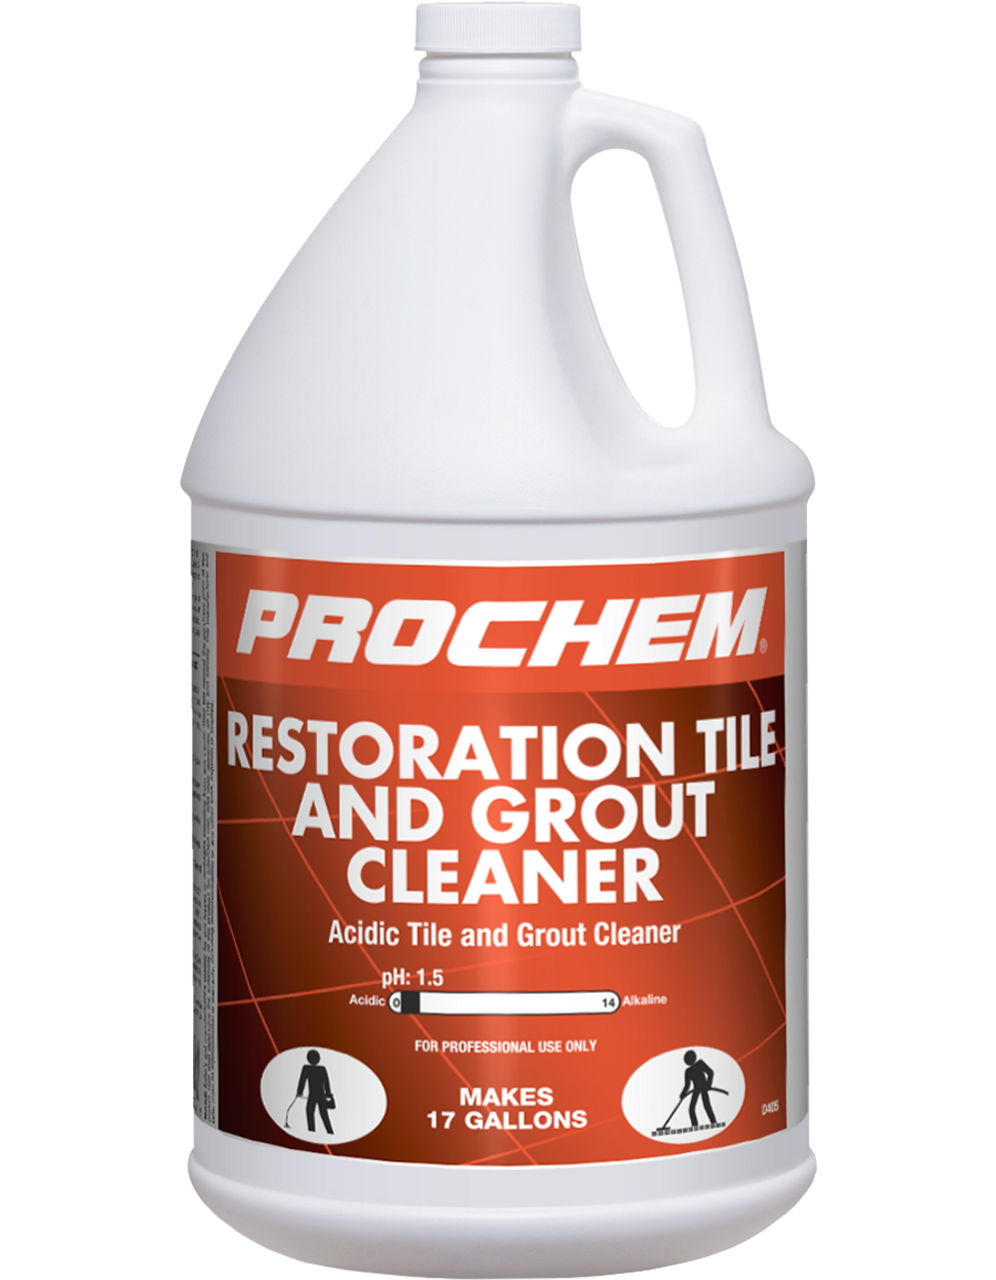 Prochem Restoration Tile and Grout Cleaner - 1gal